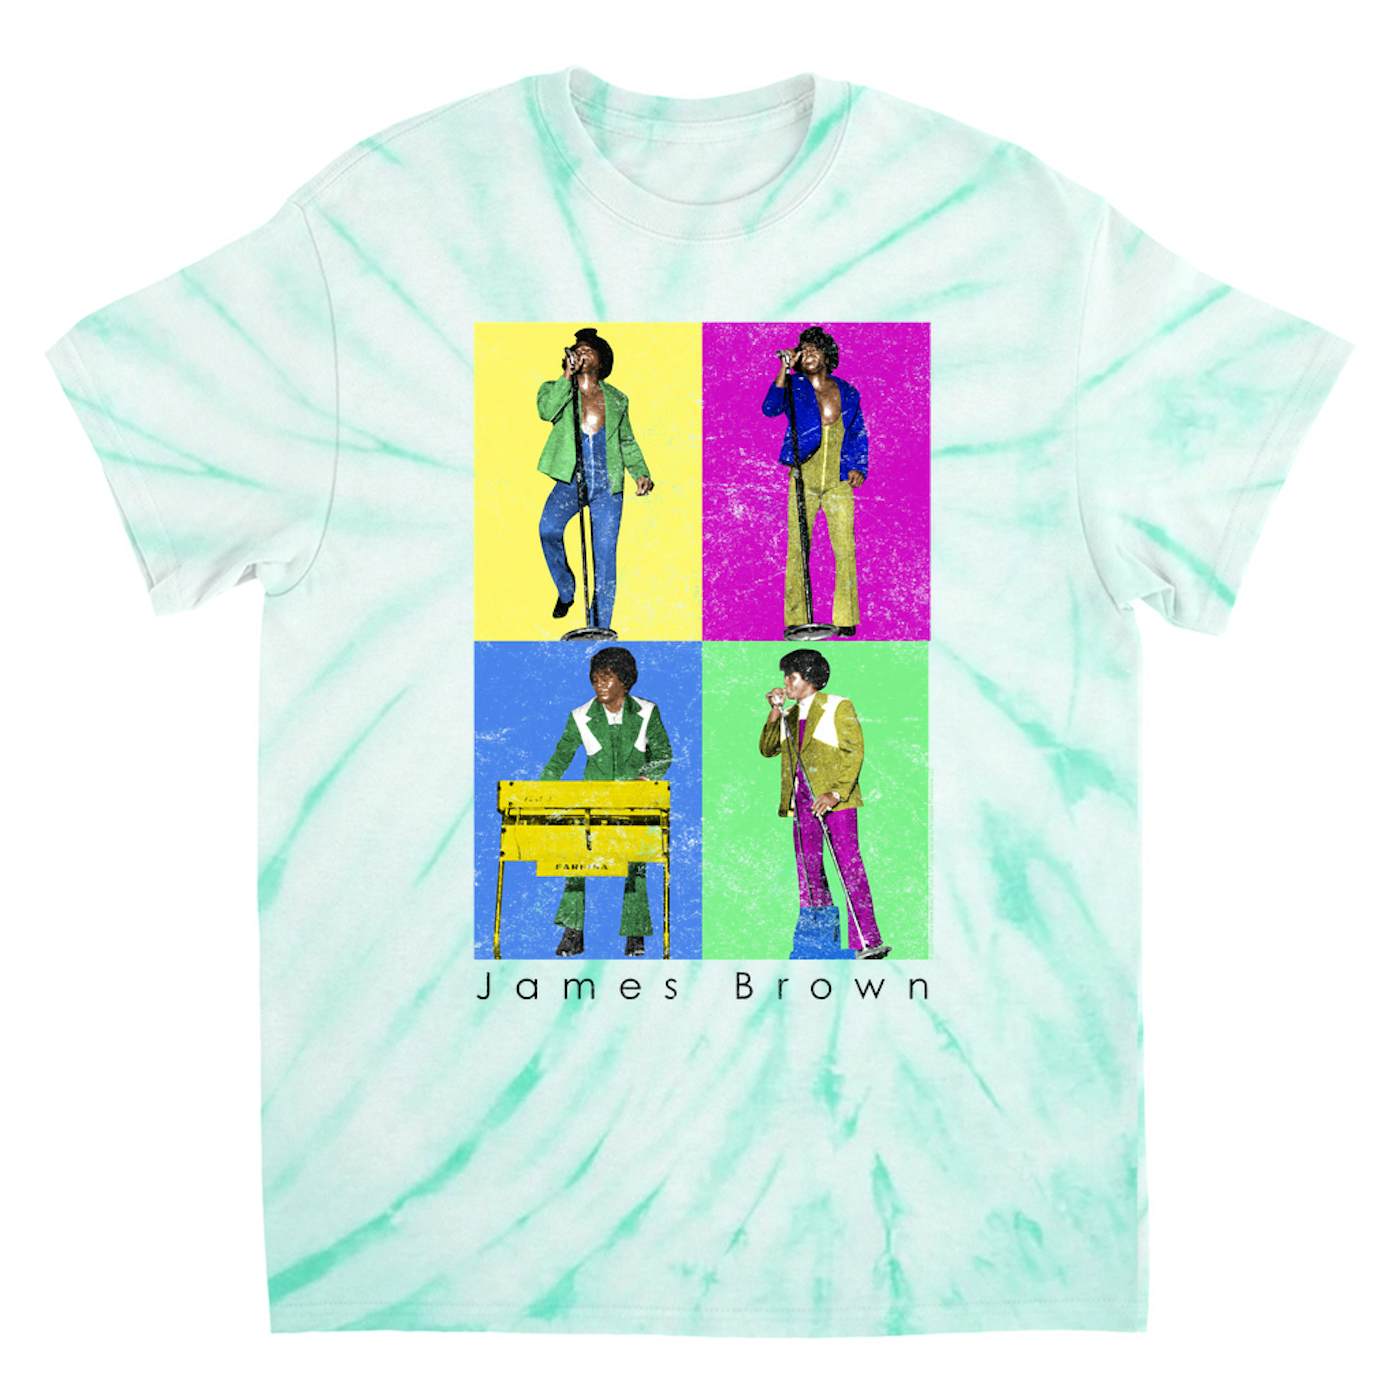 James Brown T-Shirt | Pop Art Sex Machine Dance Moves James Brown Tie Dye Shirt